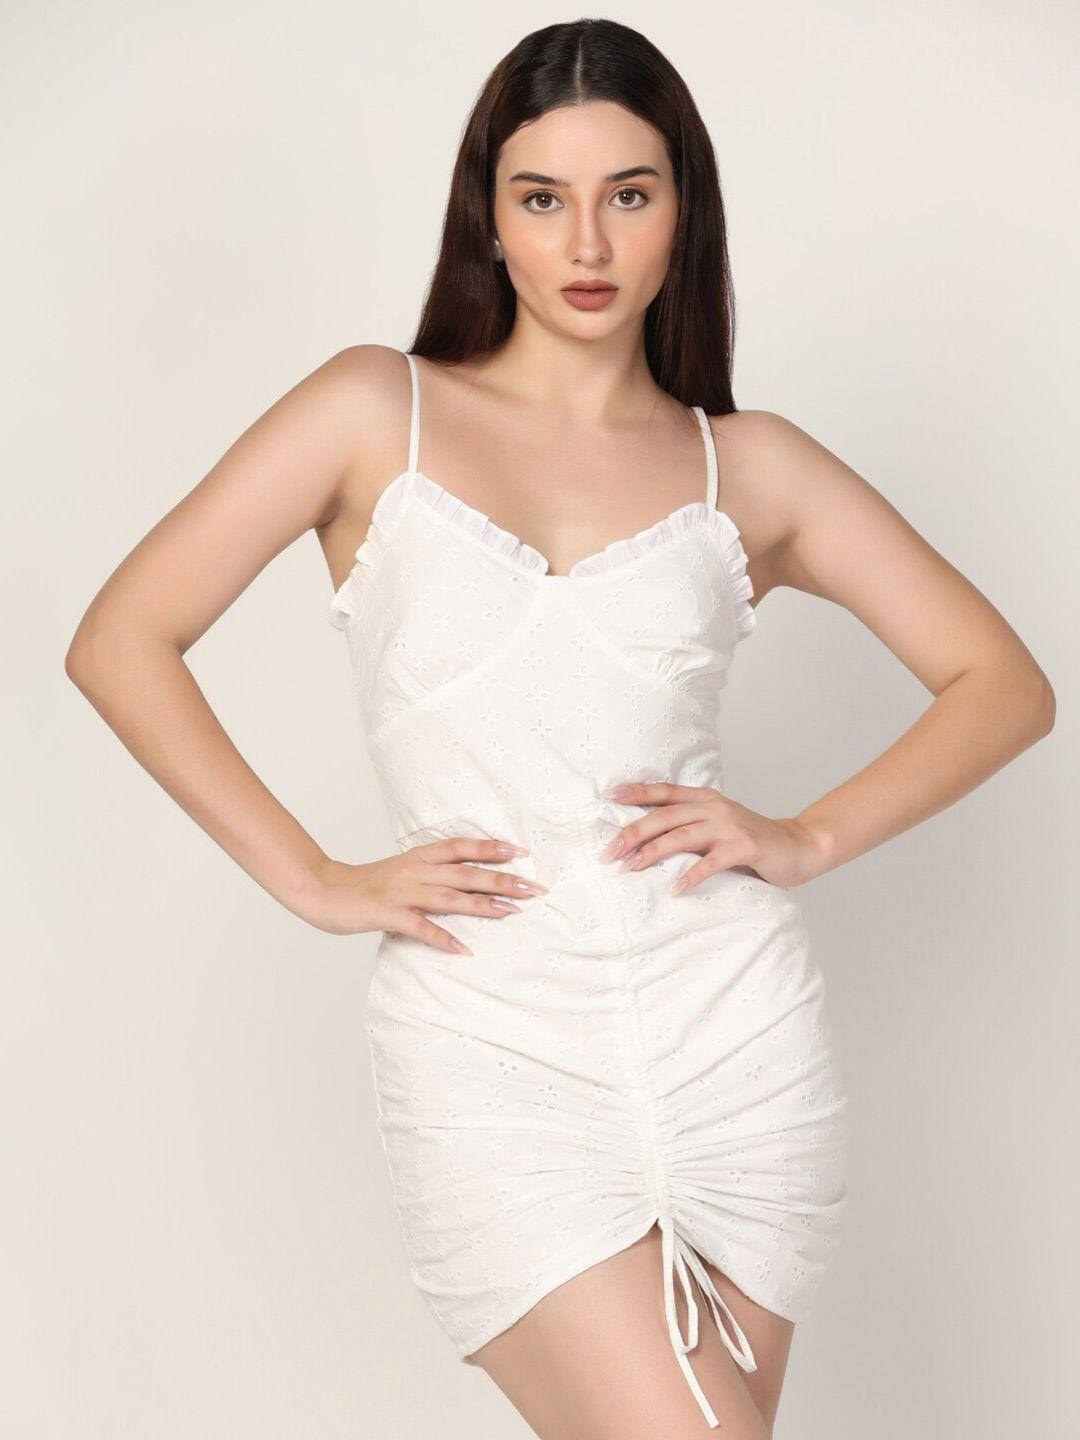 starin white dress